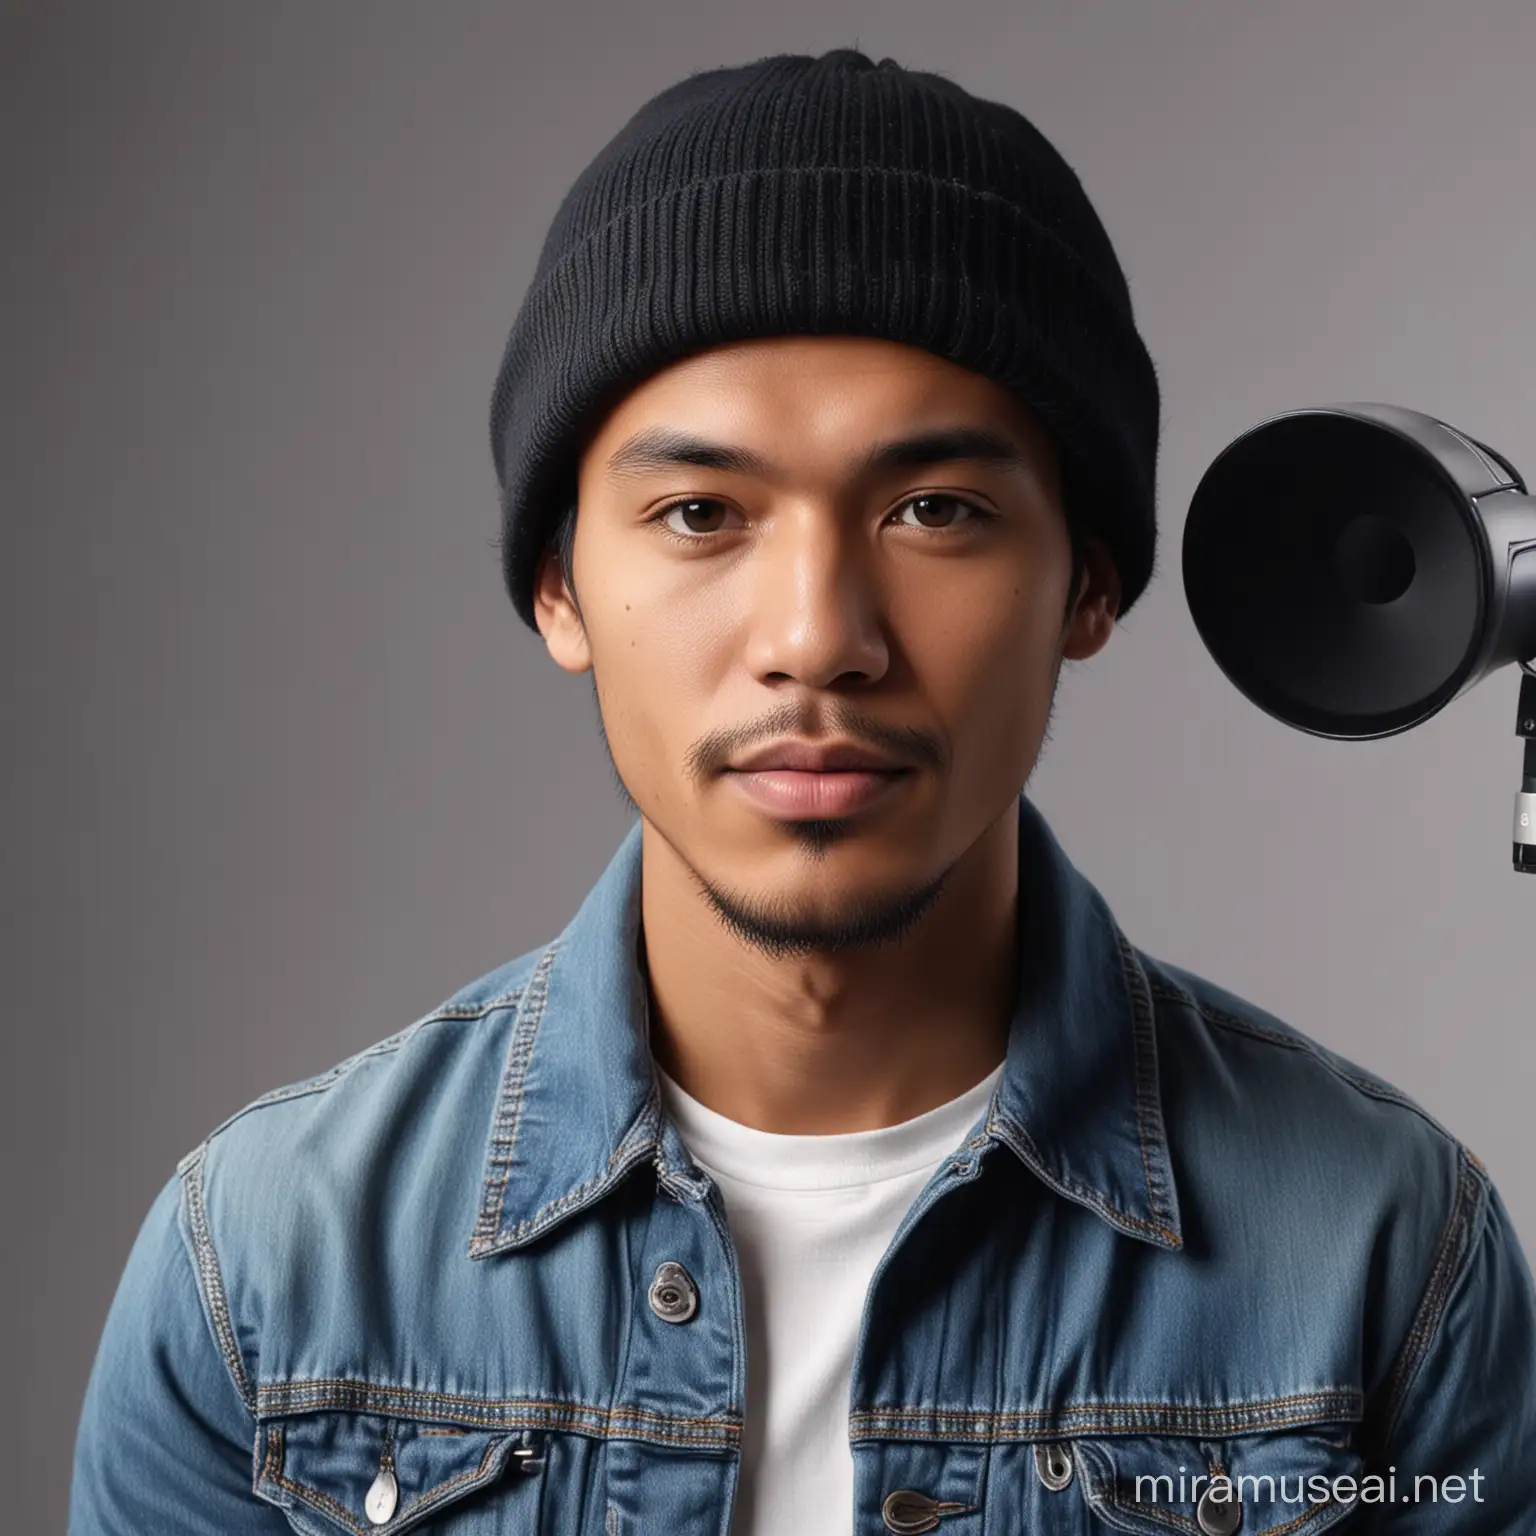 Indonesian Music Producer in Recording Studio Ultra HD 8K Portrait